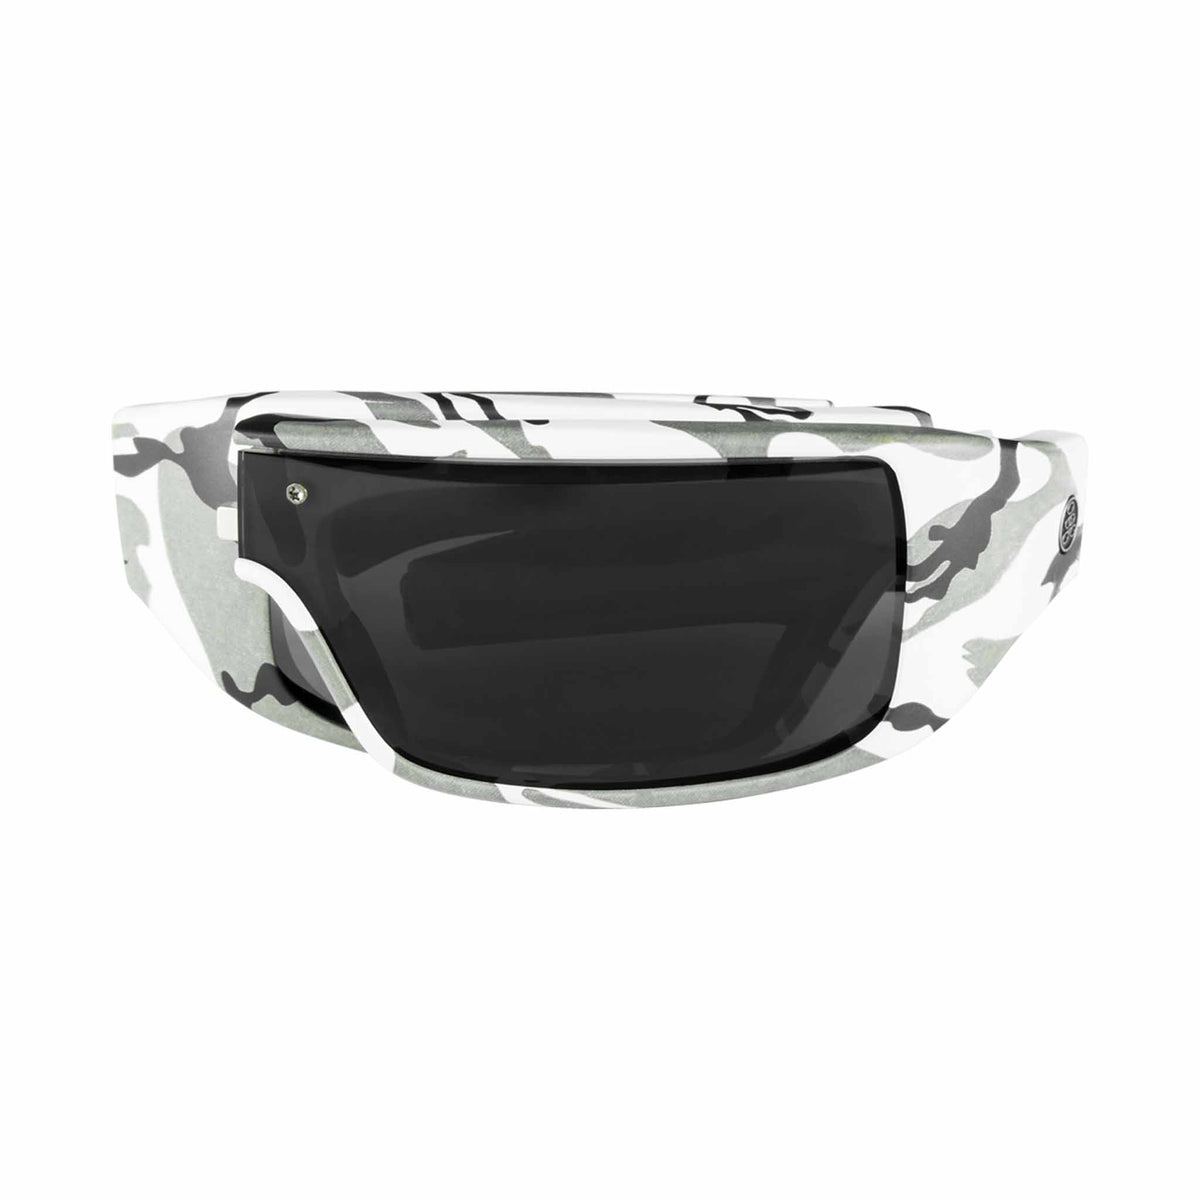 Popticals, Premium Compact Sunglasses, PopGear, 010050-CCGS, Standard Sunglasses, Matte White Camo Frame, Gray Lenses, Compact View